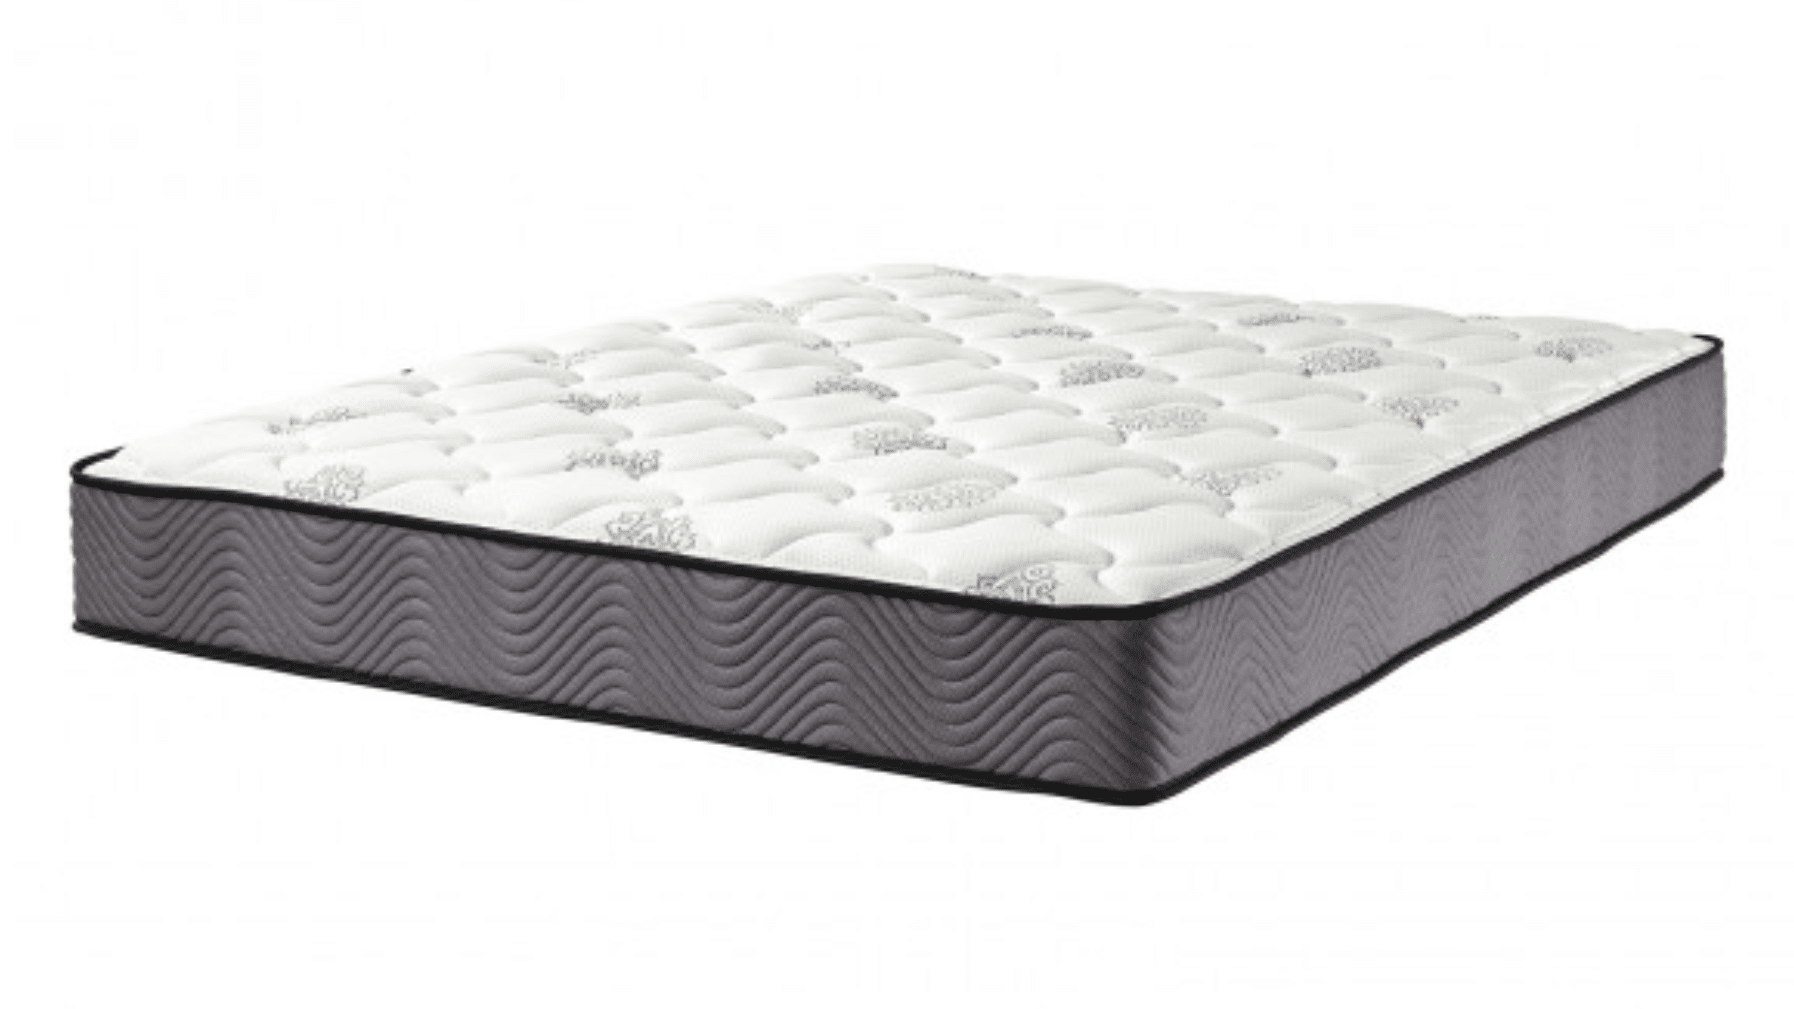 wonderest mattress in a box review